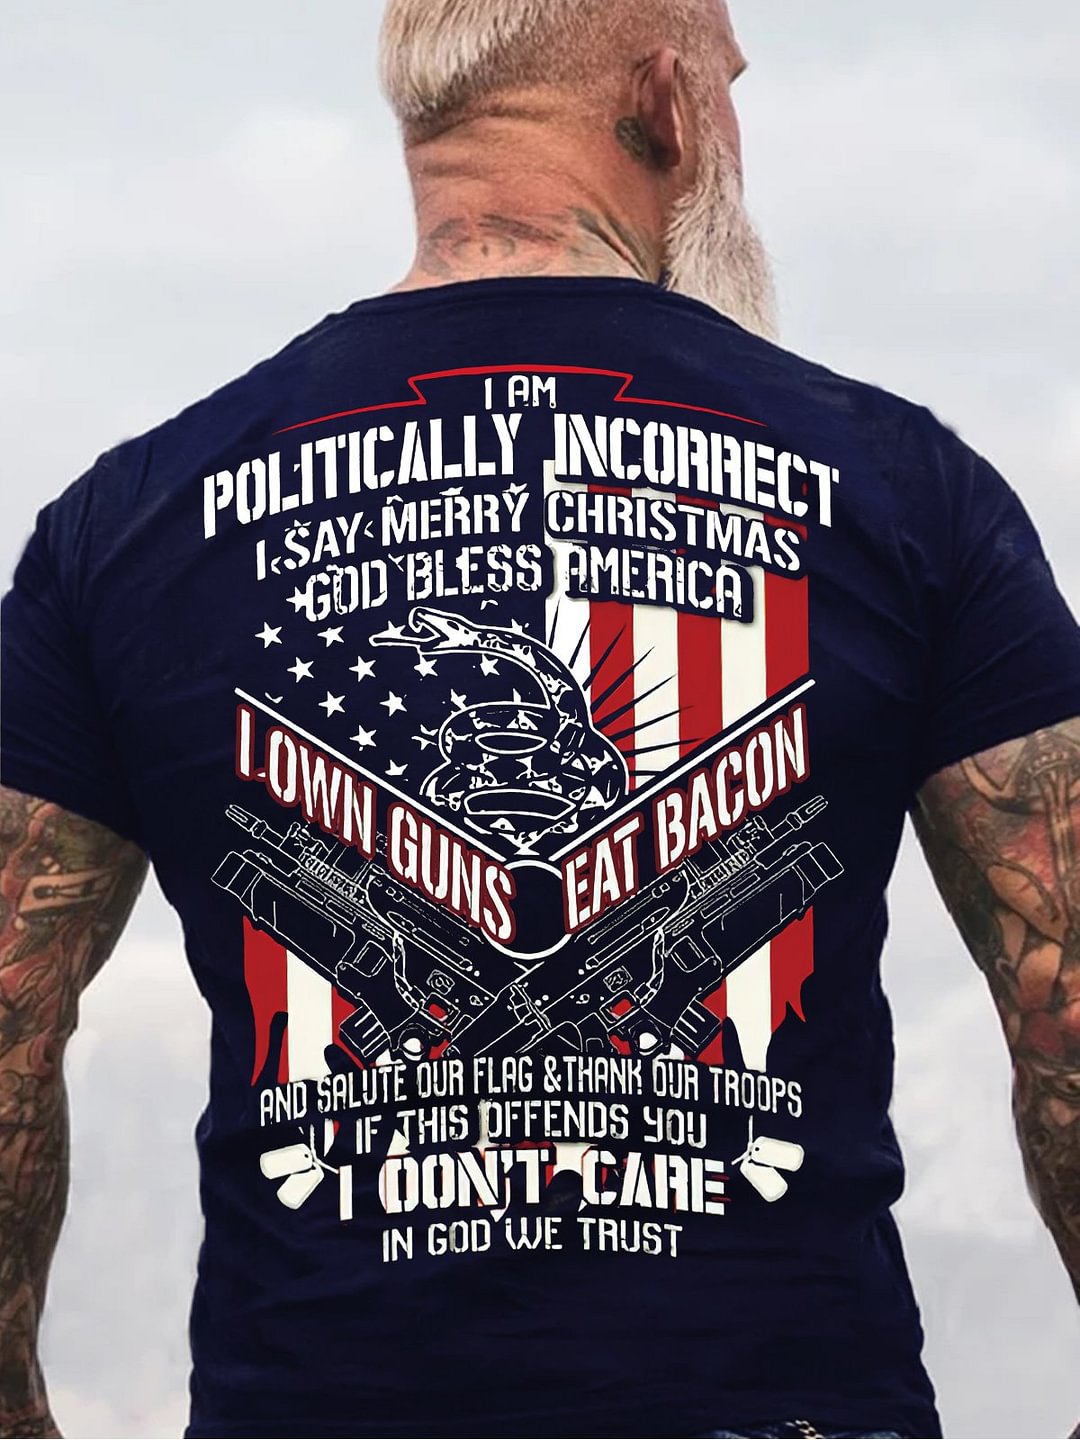 I Am Politically Incorrect I Say Merry Christmas, God Bless America, I Own Guns Eat Bacon Veteran T-Shirt